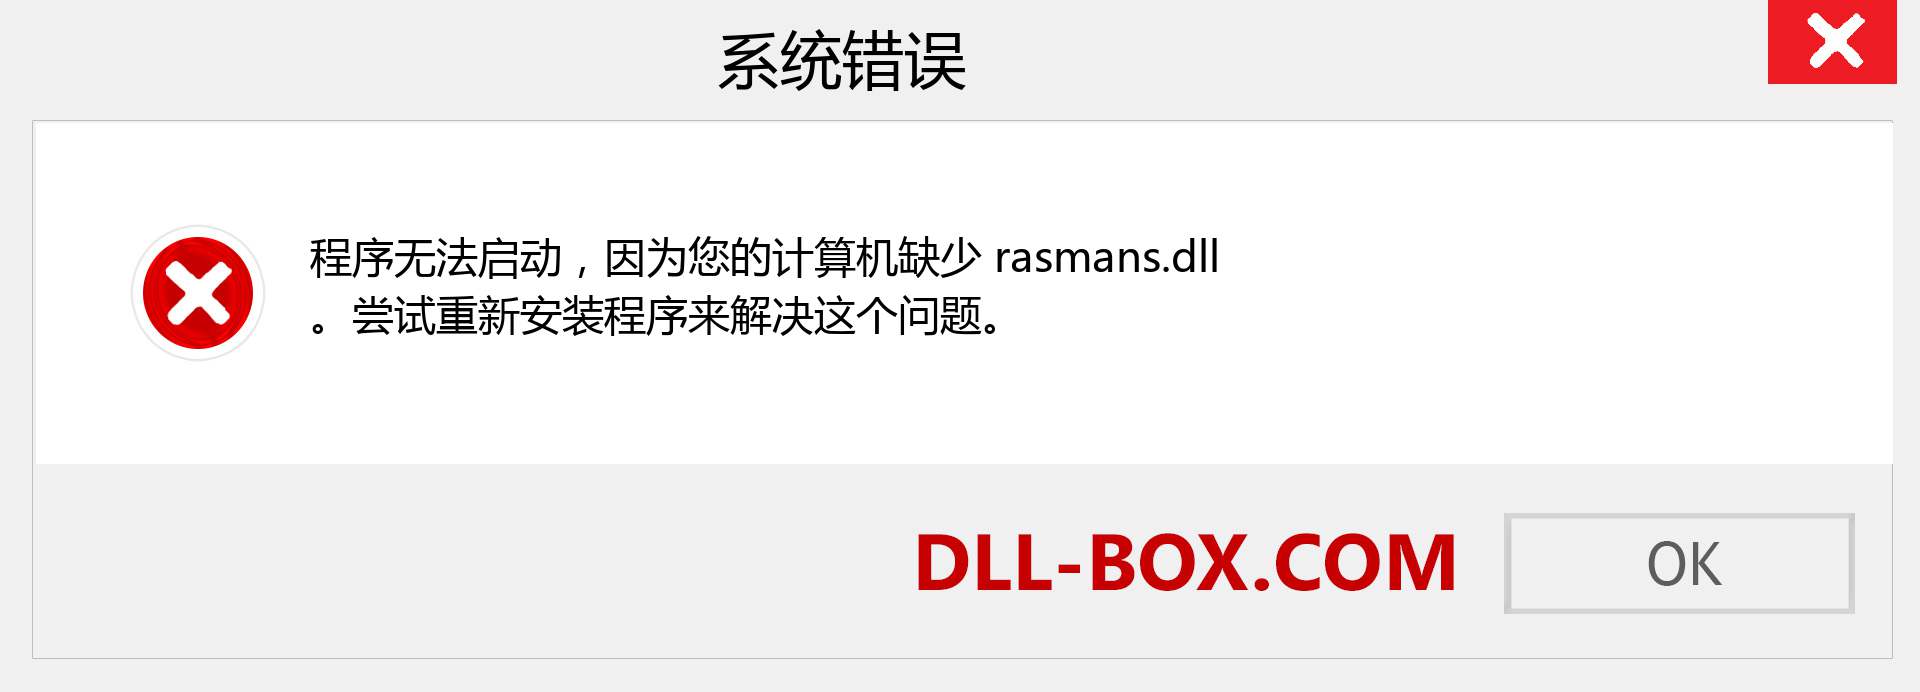 rasmans.dll 文件丢失？。 适用于 Windows 7、8、10 的下载 - 修复 Windows、照片、图像上的 rasmans dll 丢失错误